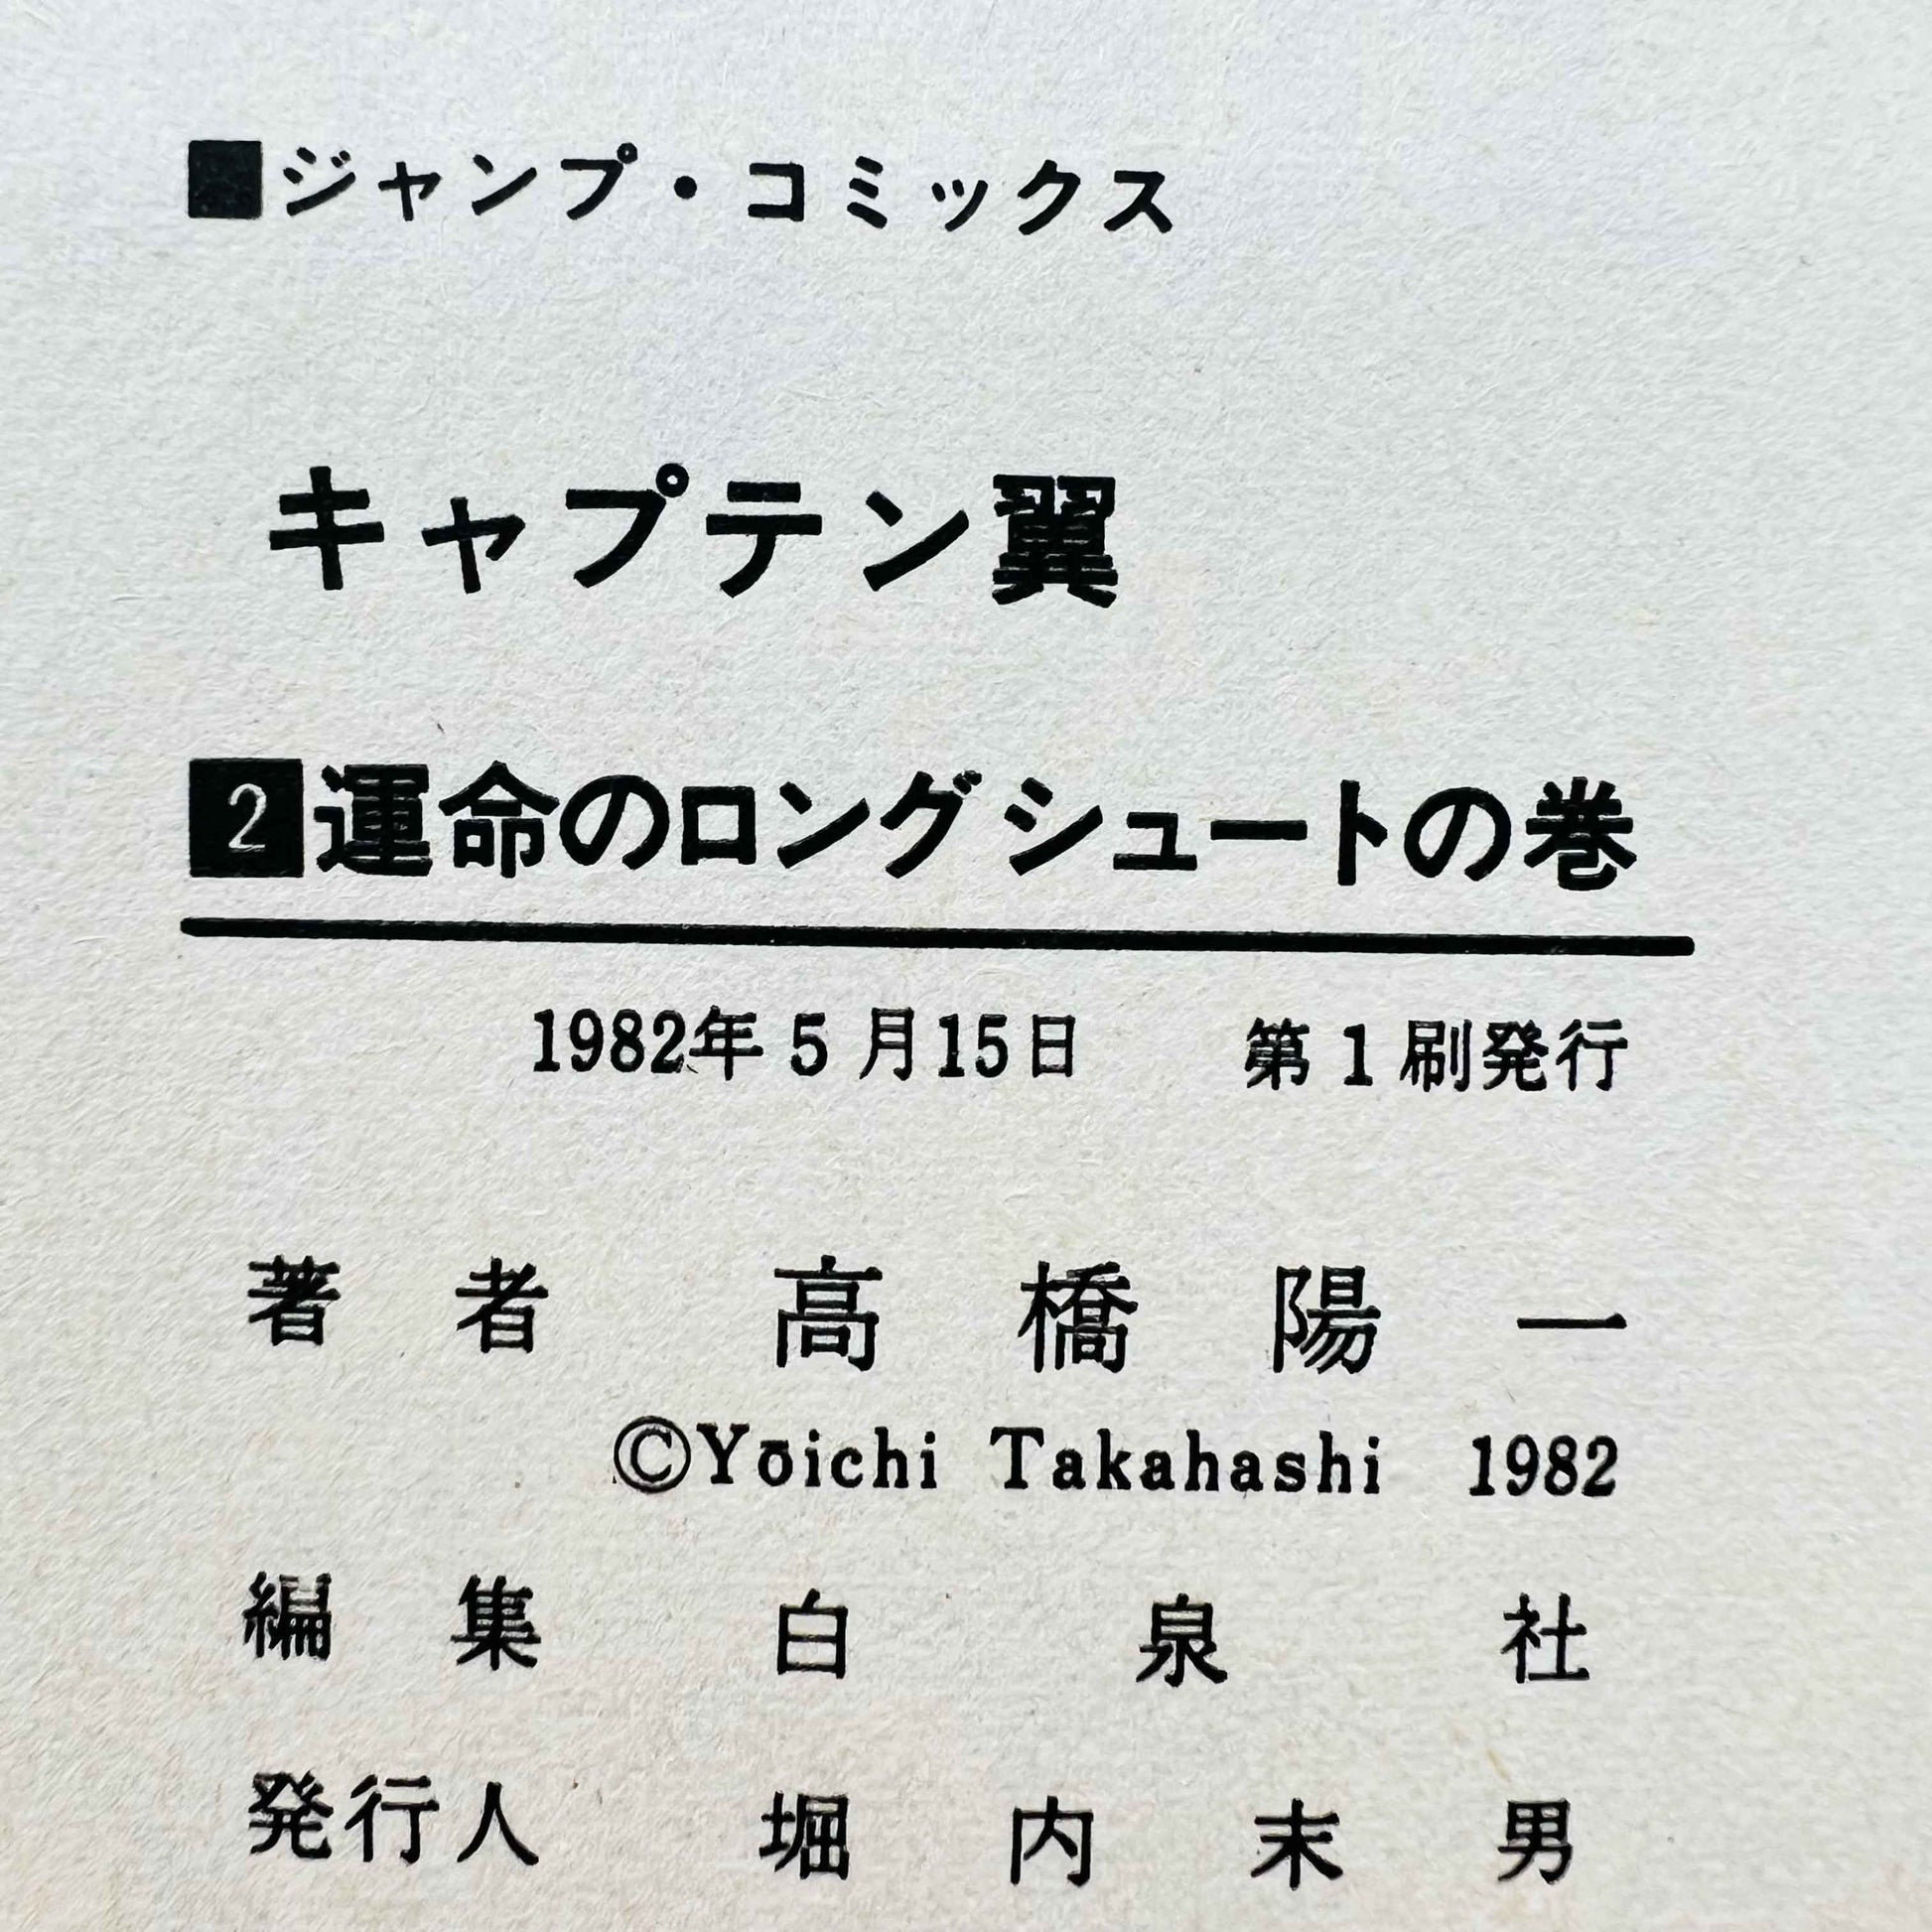 Captain Tsubasa - Volume 02 - 1stPrint.net - 1st First Print Edition Manga Store - M-TSUBASA-02-001